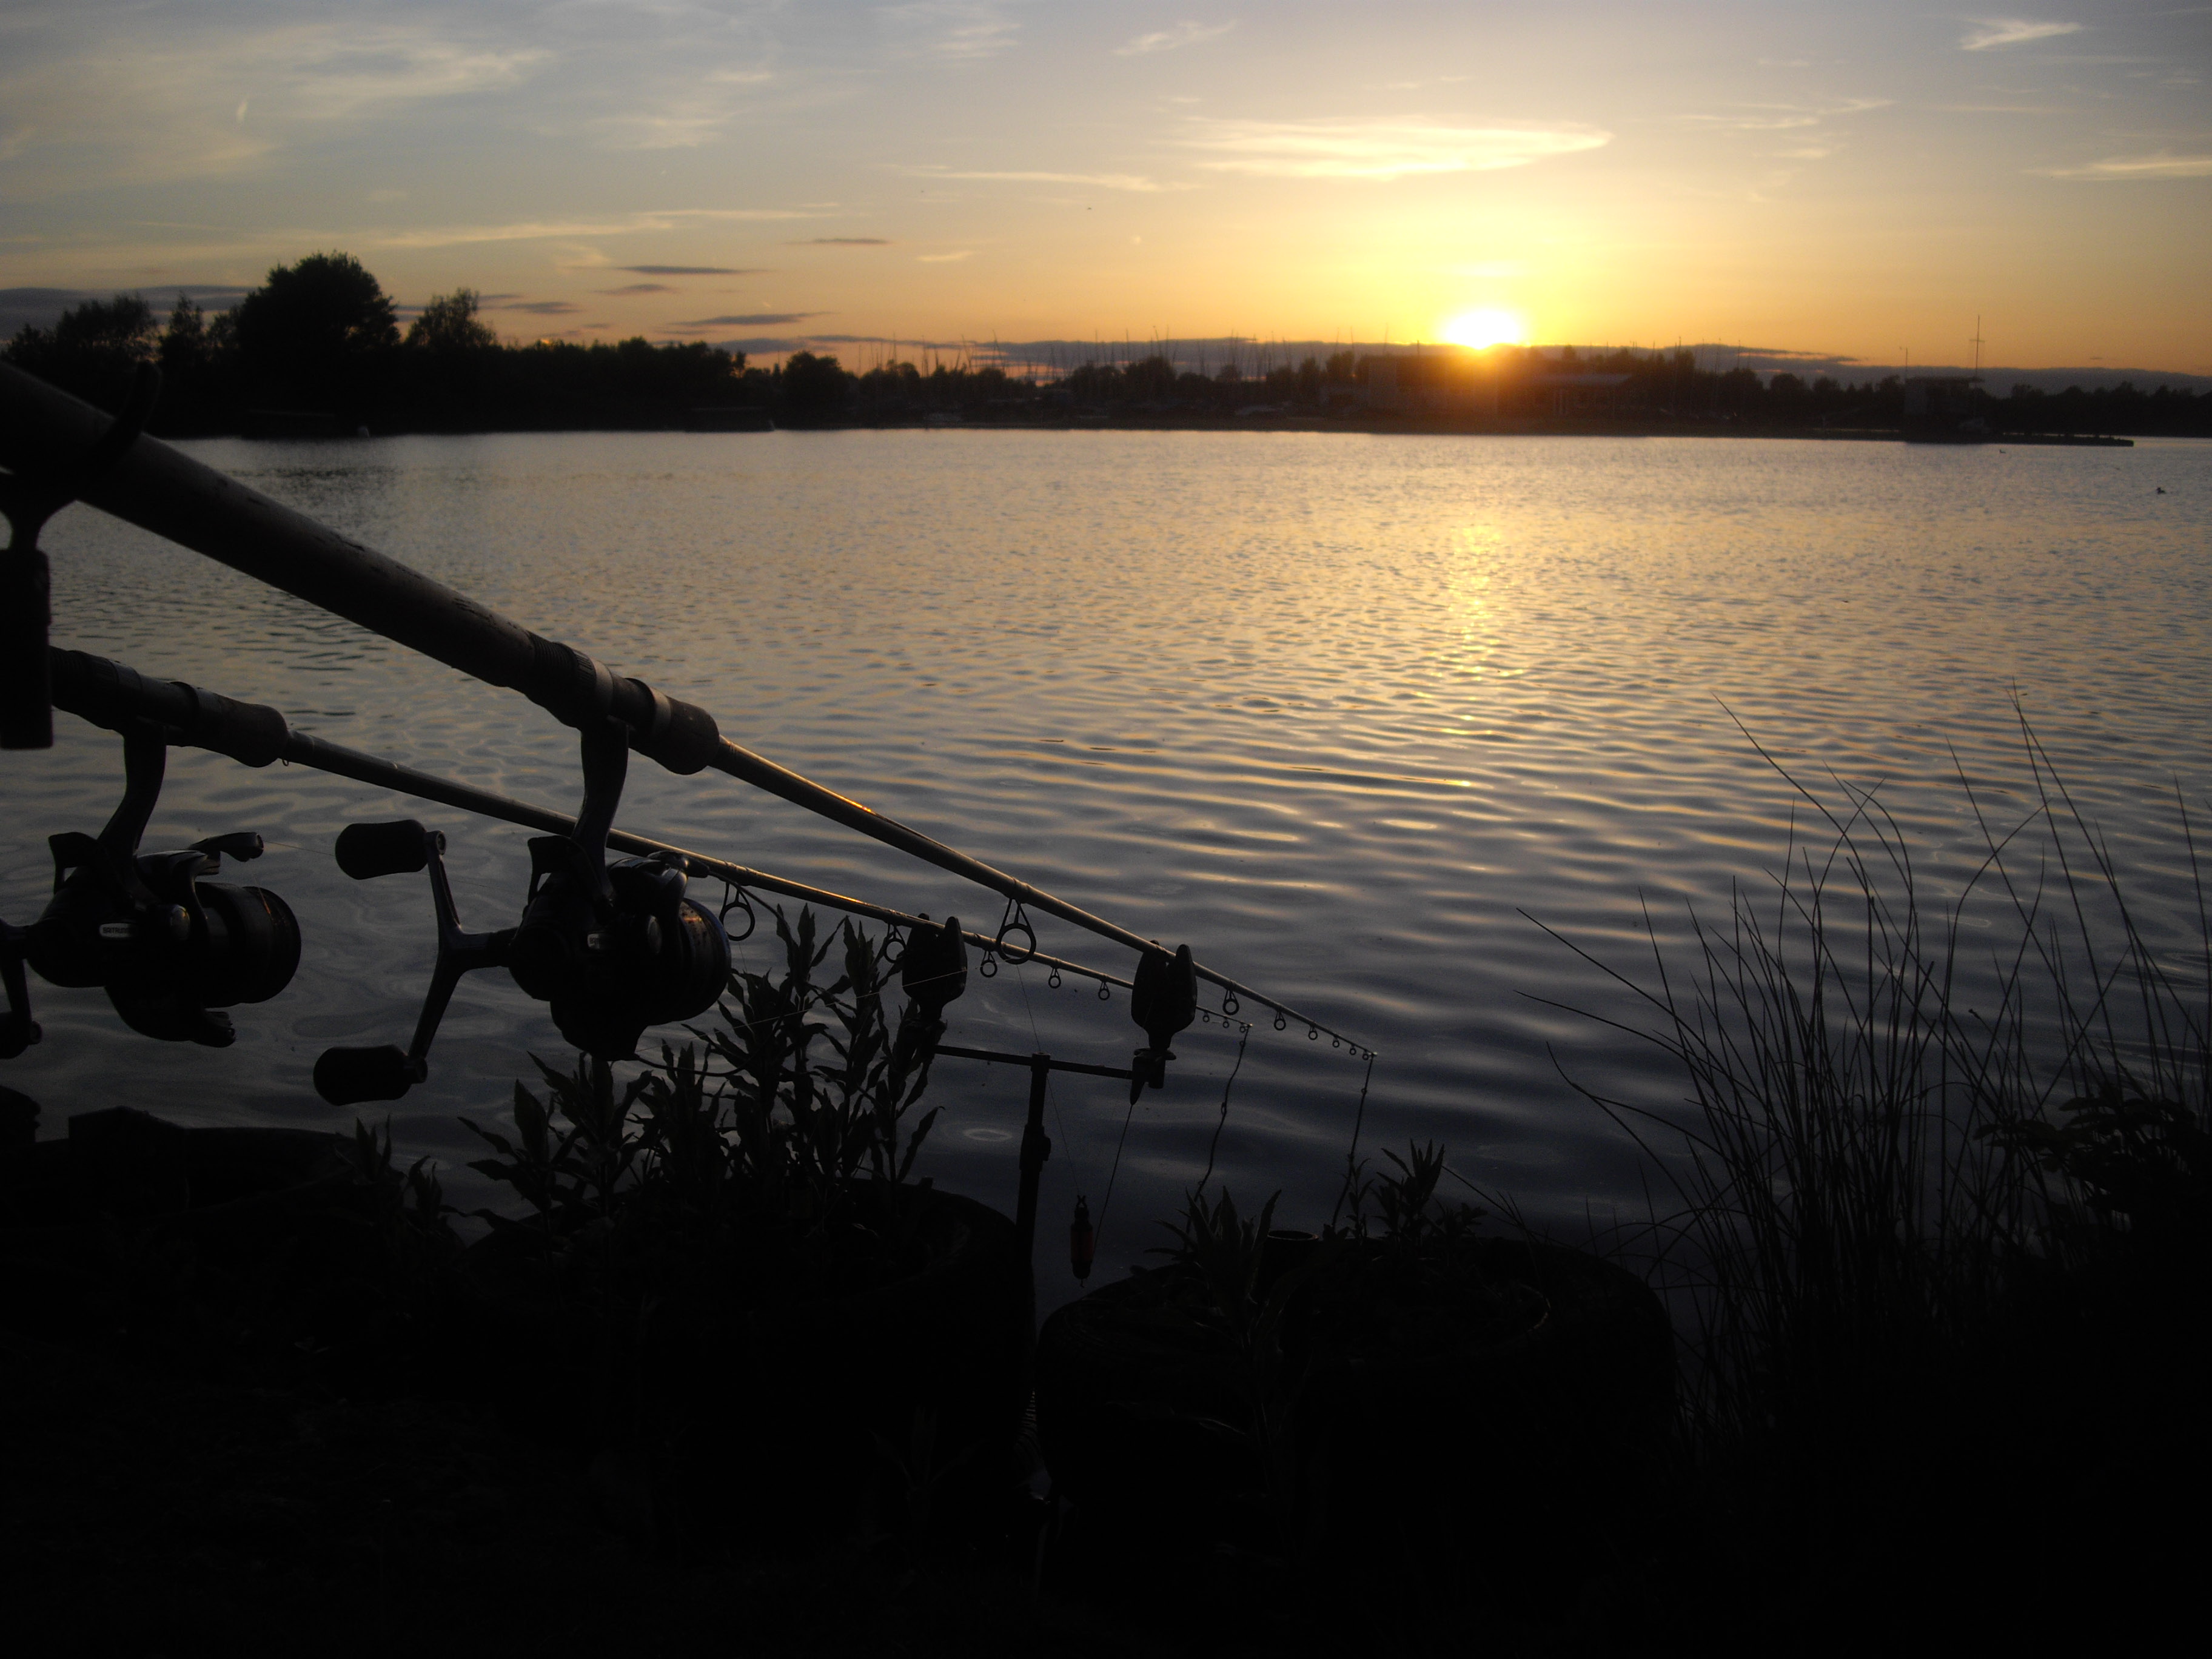 fishing in lake evening sky